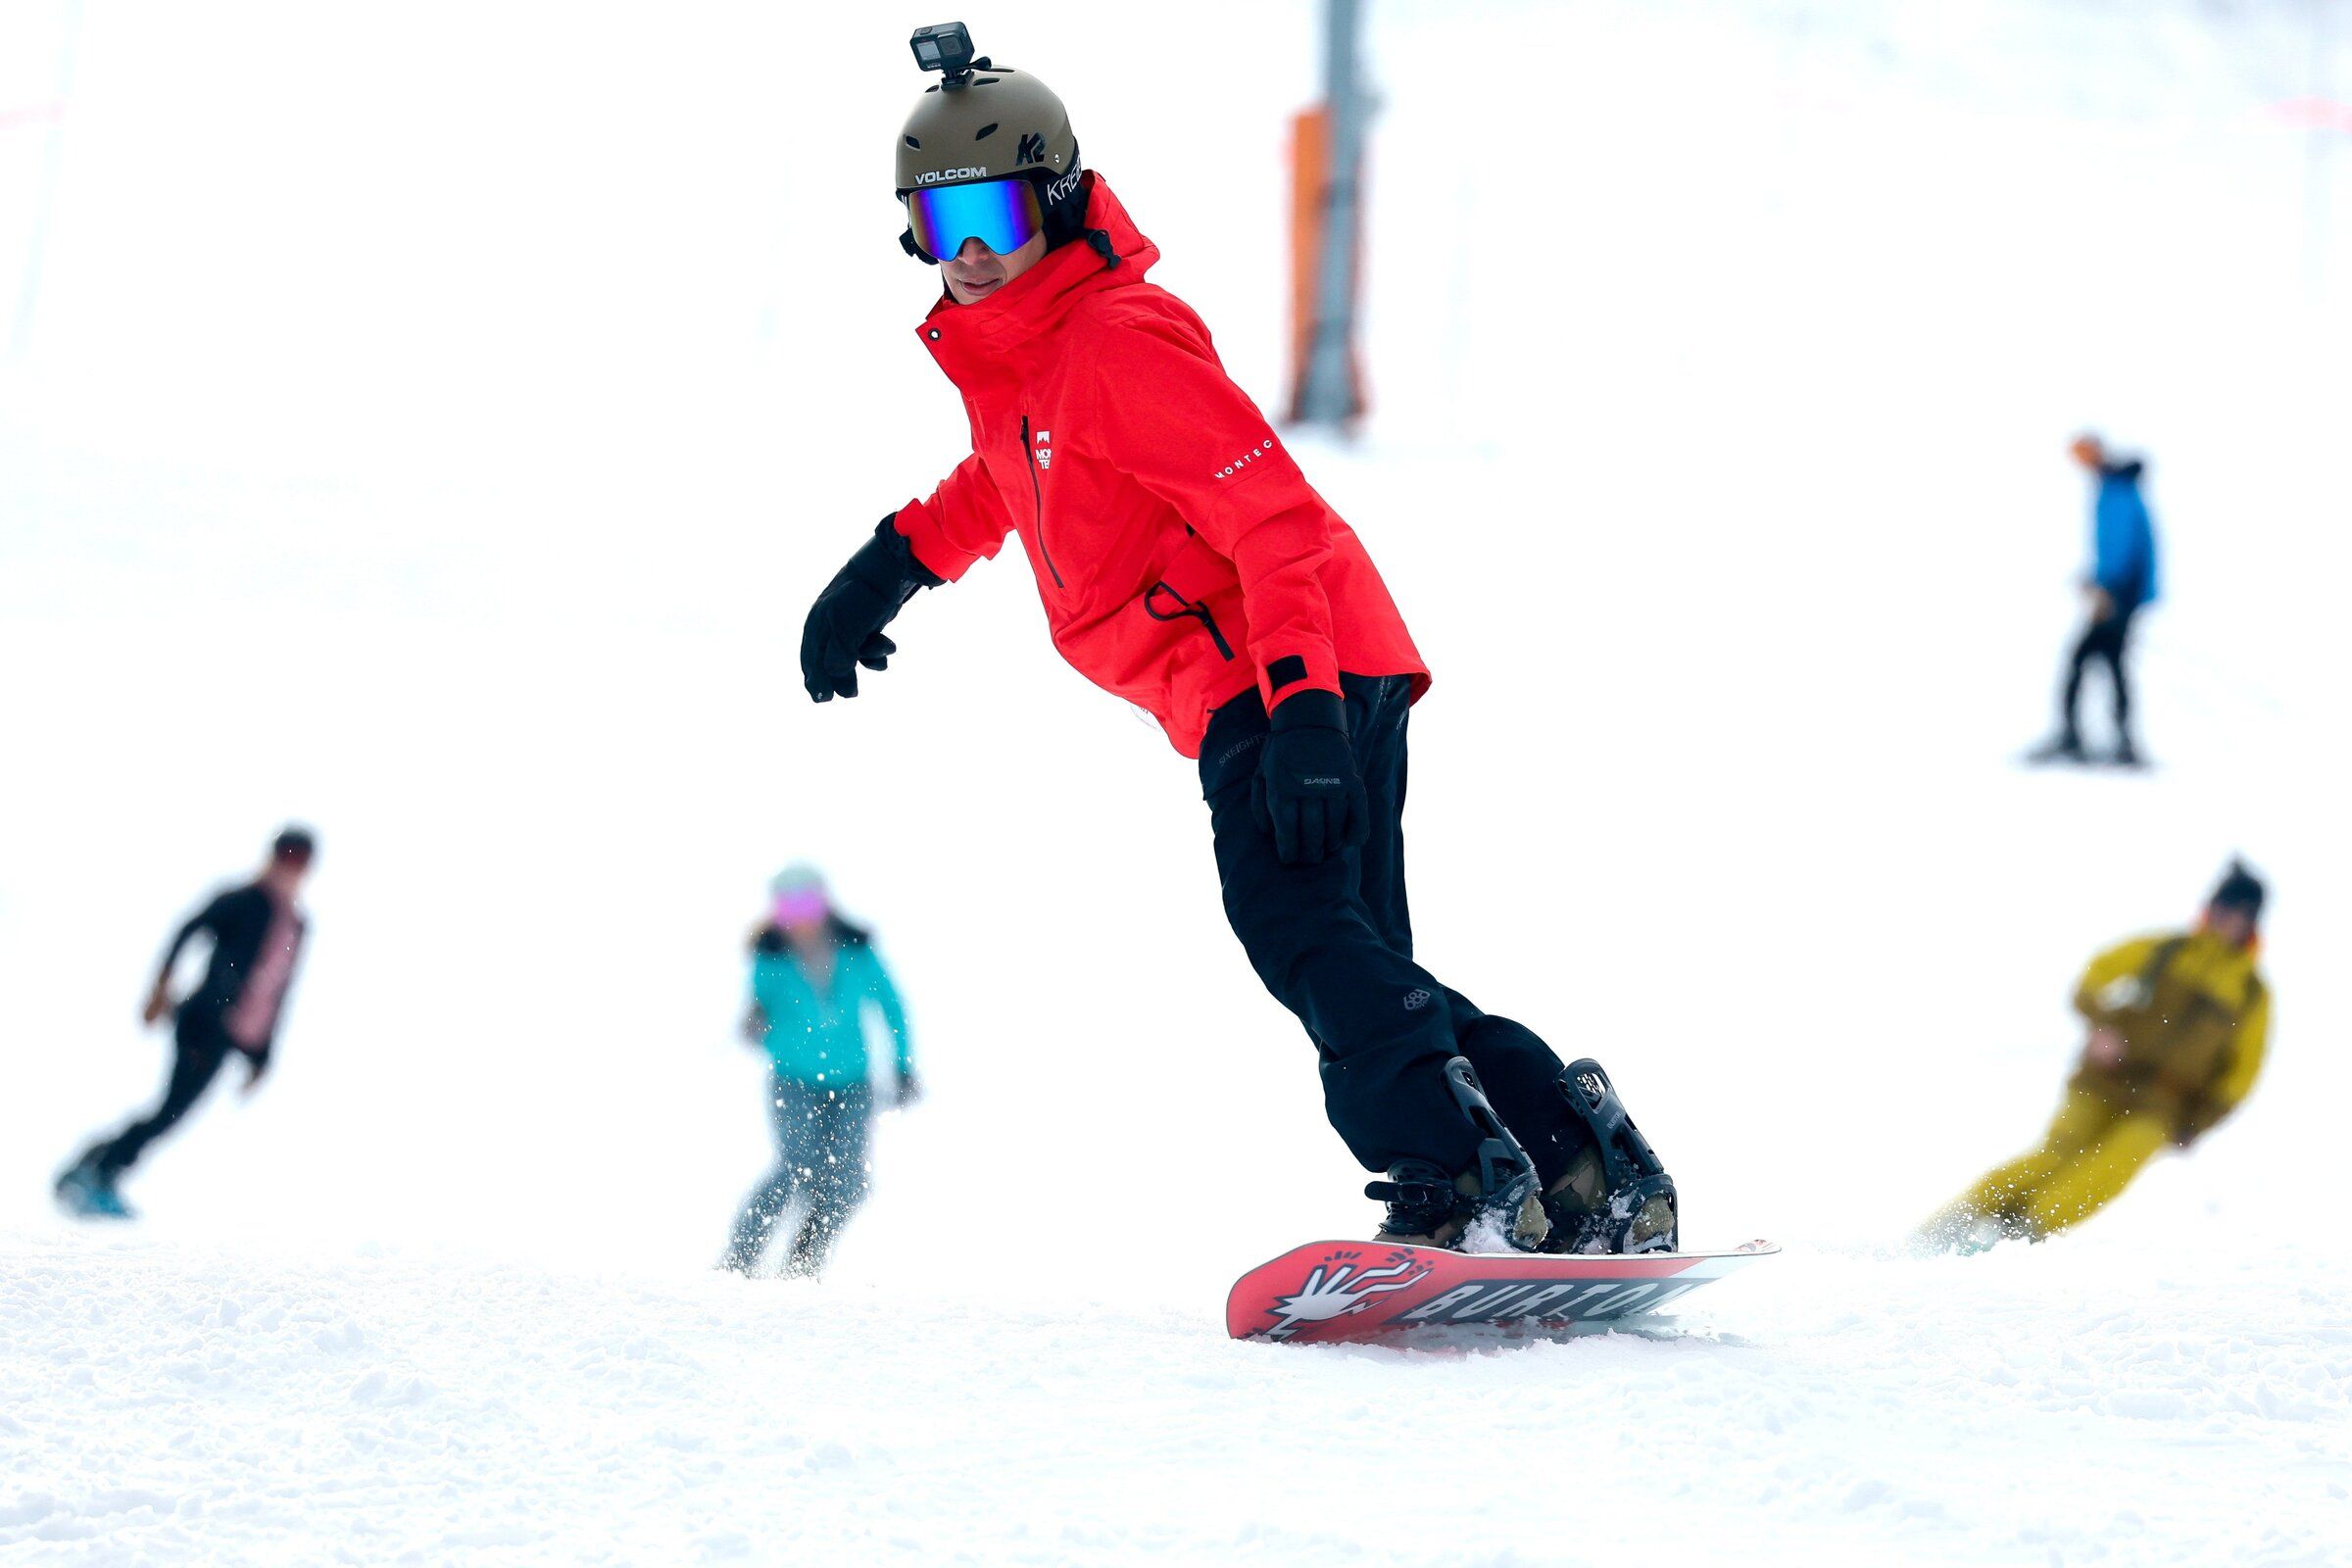 What's new in WA snow country: Ski-area updates, parking, La Niña